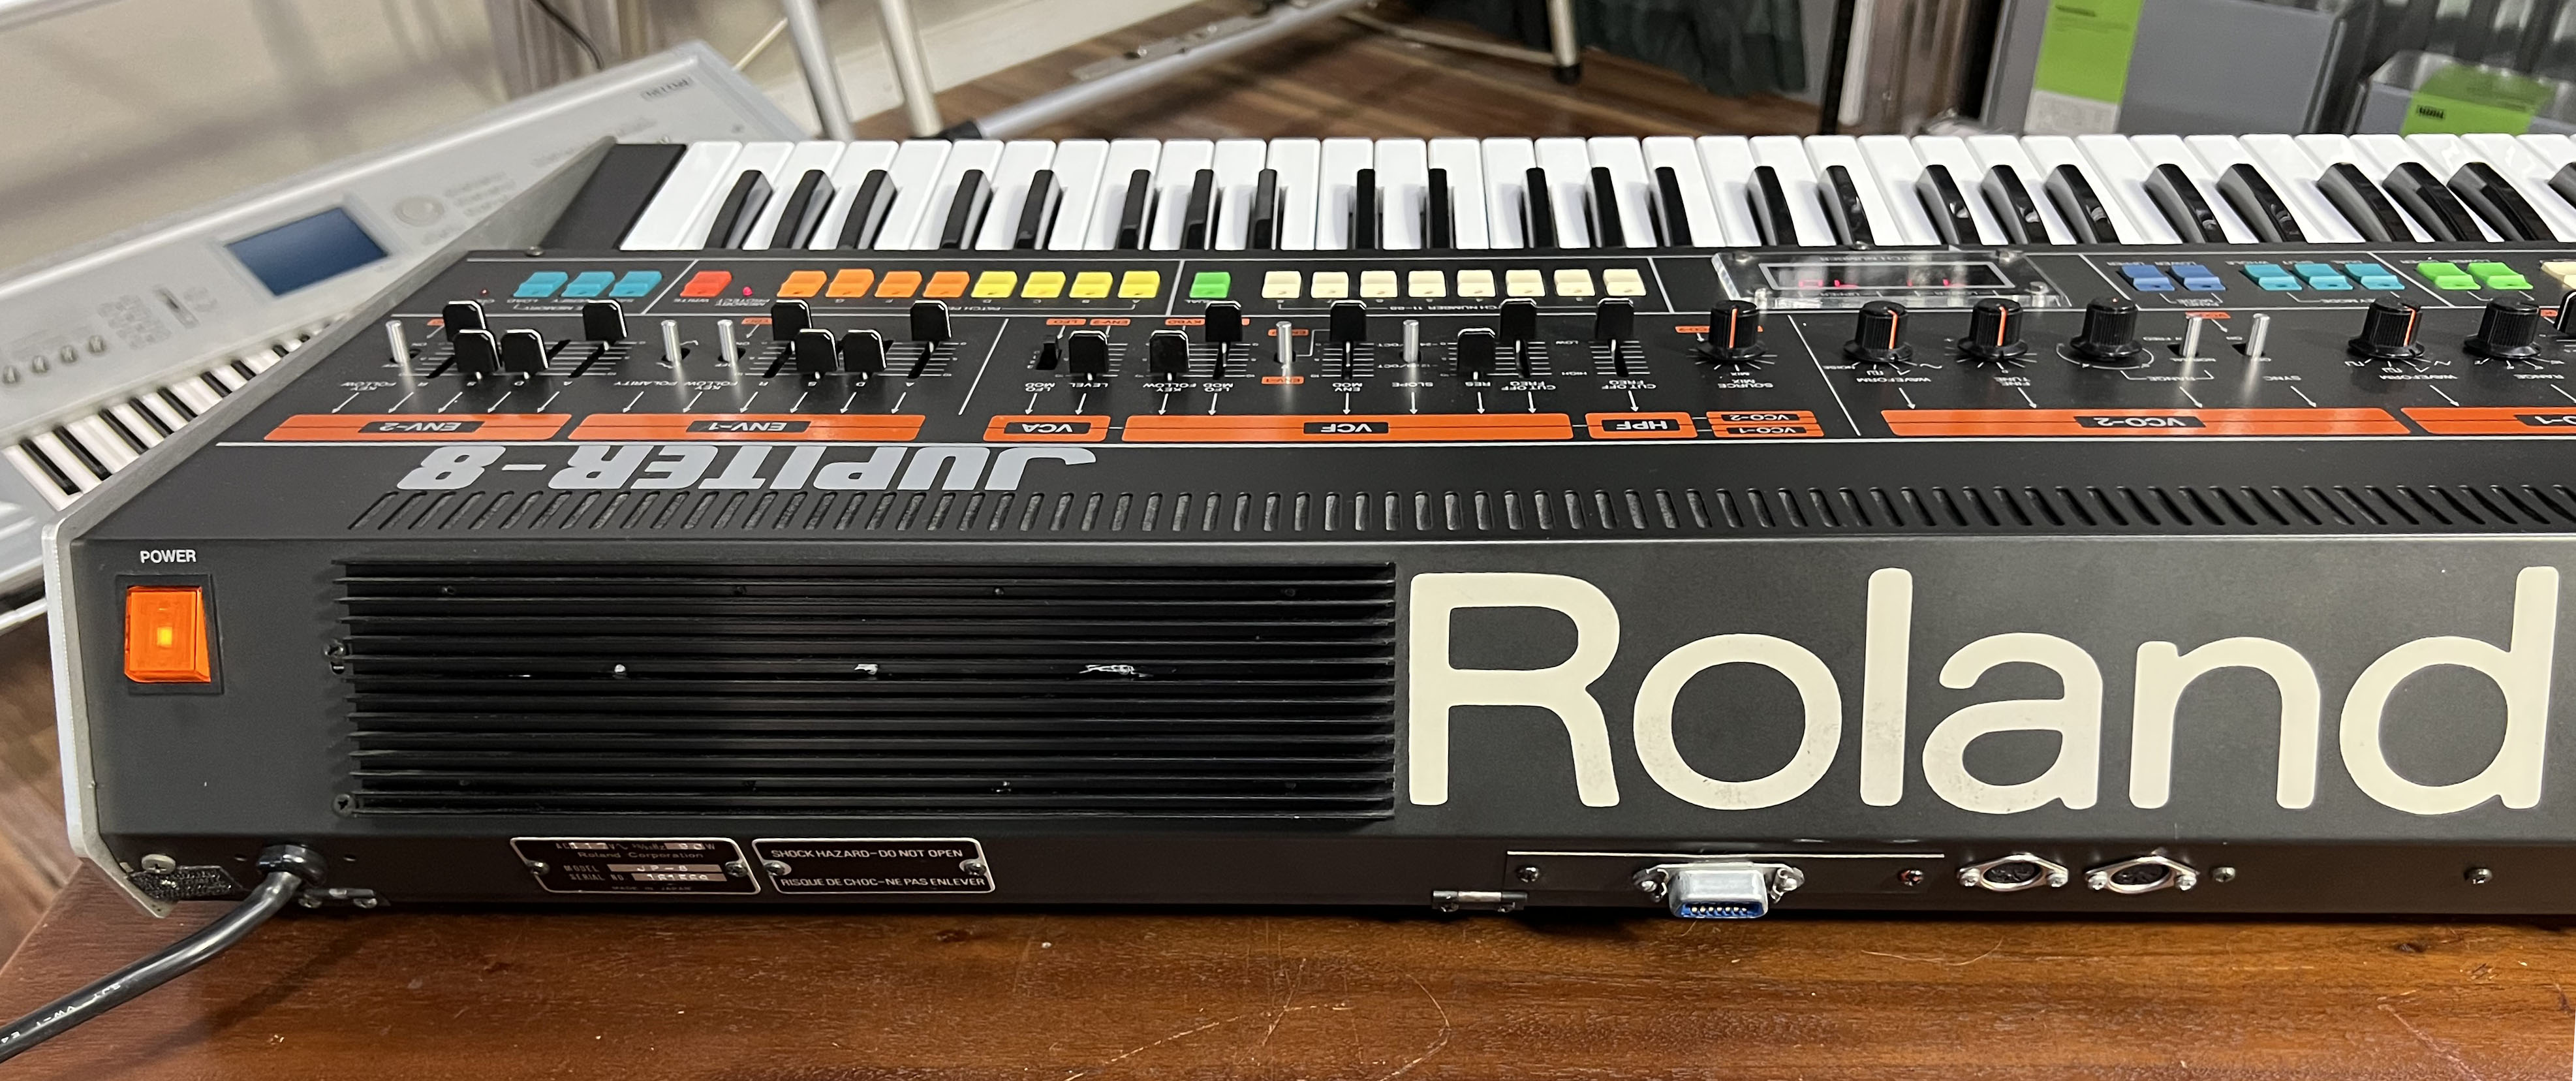 Roland Jupiter 8, with Encore MIDI kit